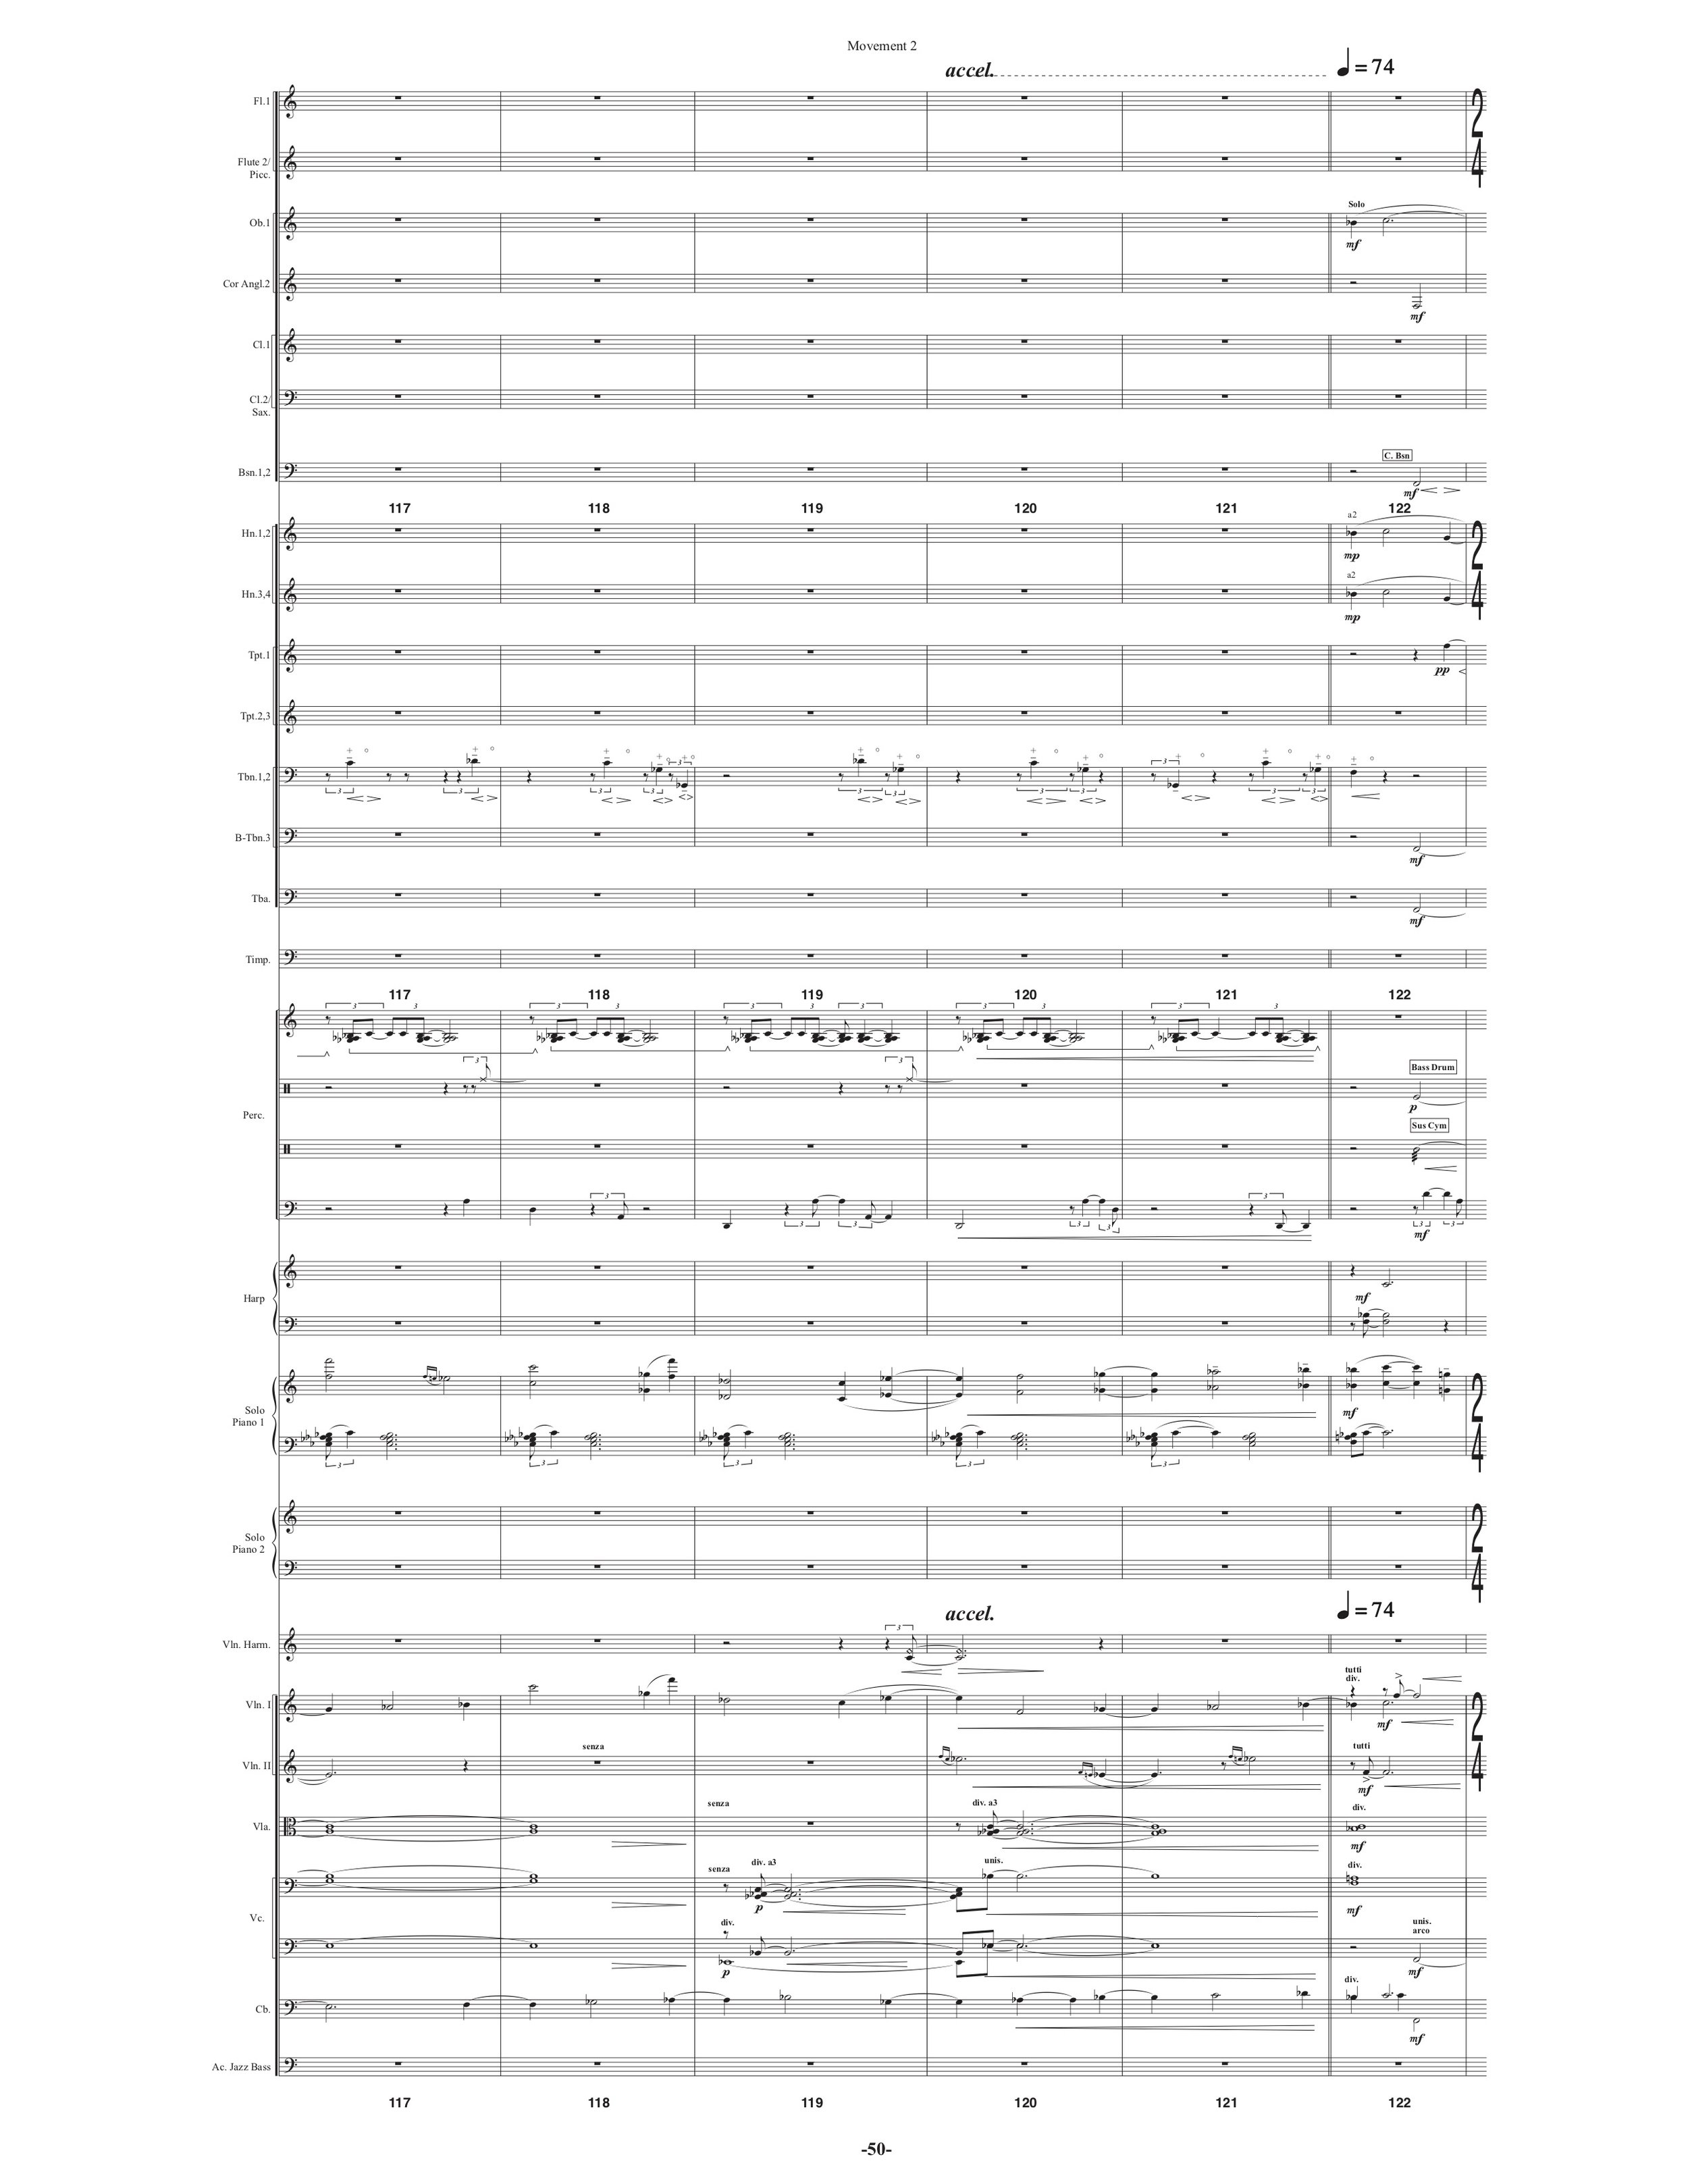 Symphony_Orch & 2 Pianos p55.jpg